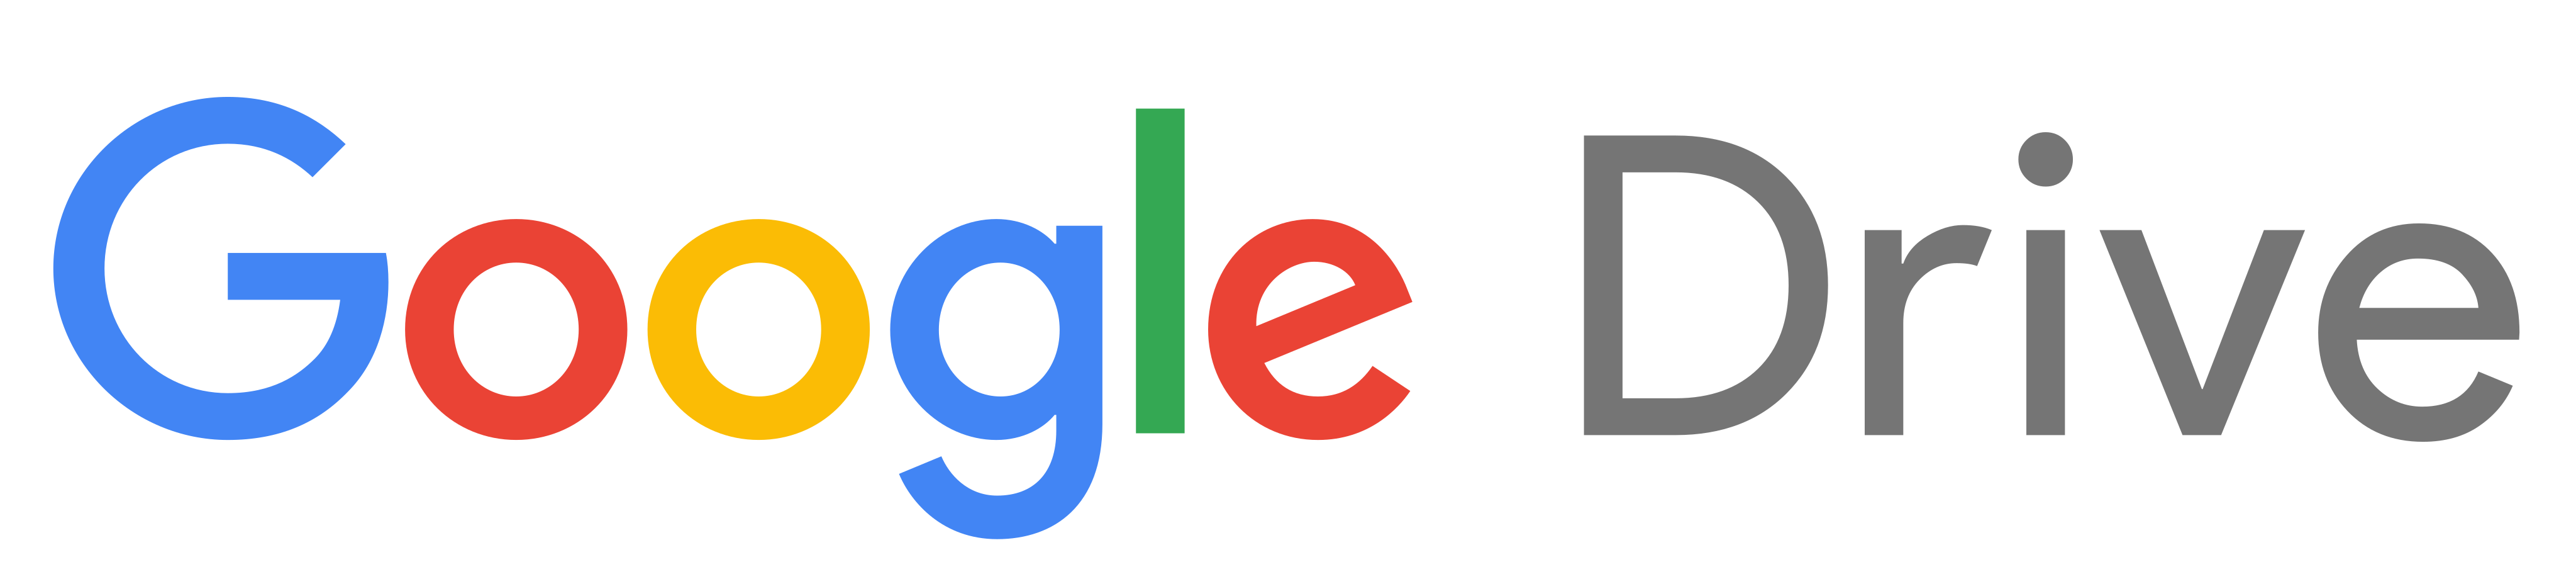 google drive logo 5 1 - Google Drive Logo